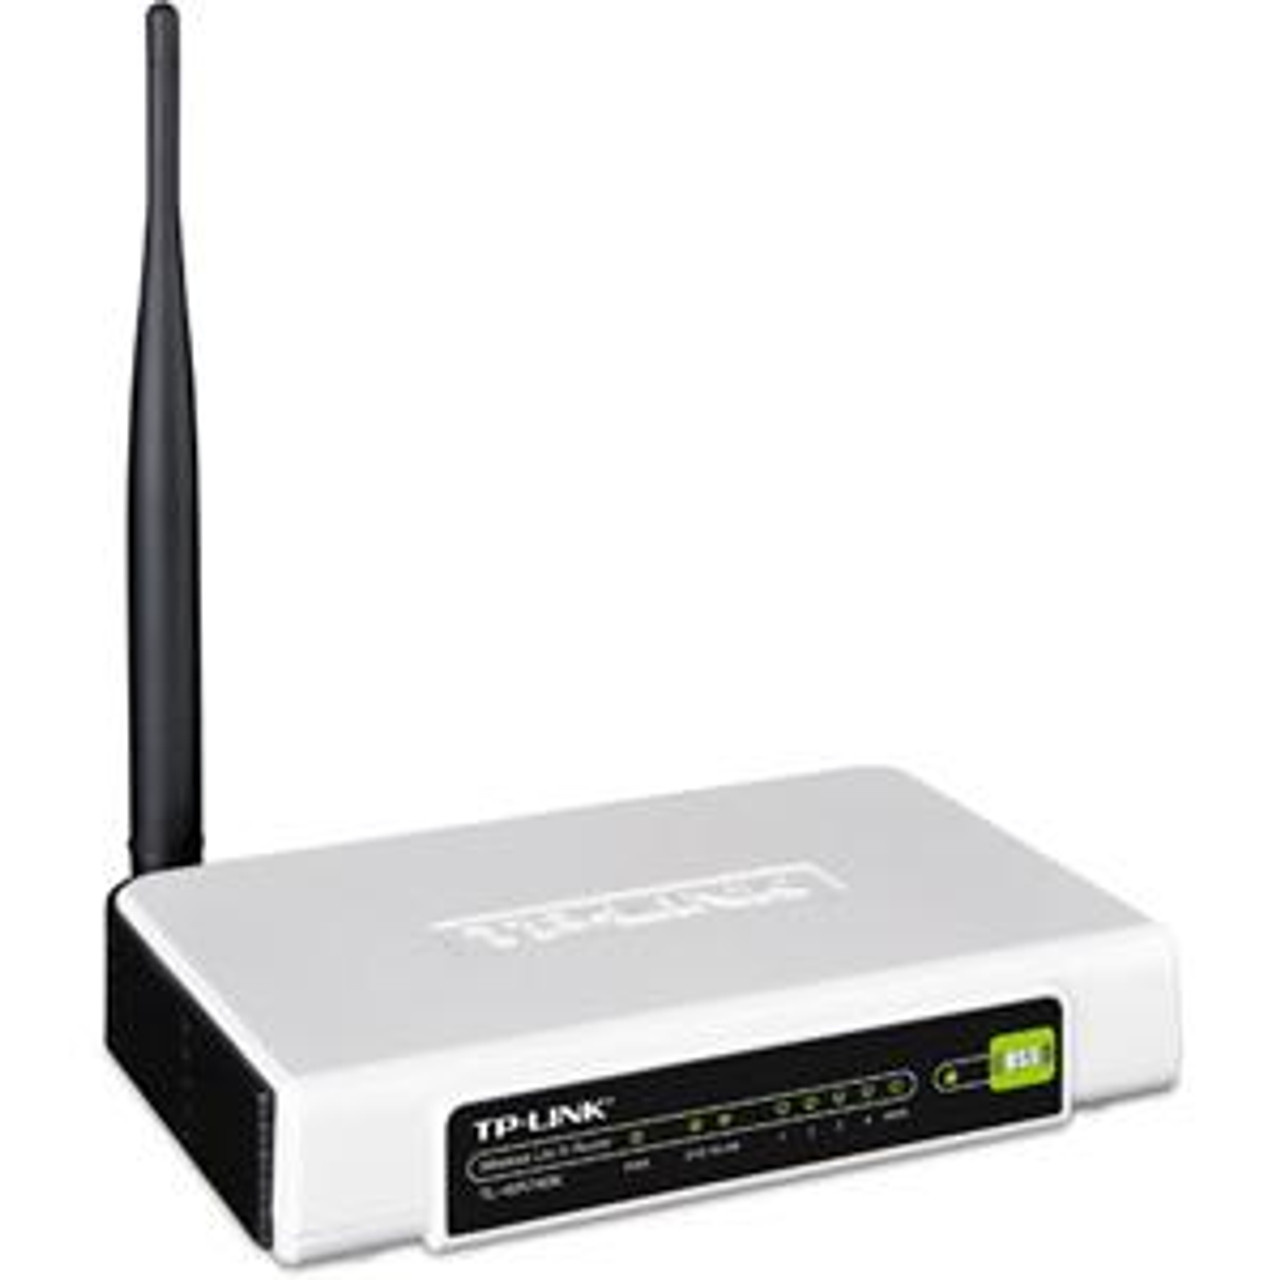 TL-WR740N TP-LINK Wireless Router 150 Mbps 4 x 10/100Base-TX Network LAN 1 x 10/100Base-TX Network WAN IEEE 802.11n (draft) (Refurbished)